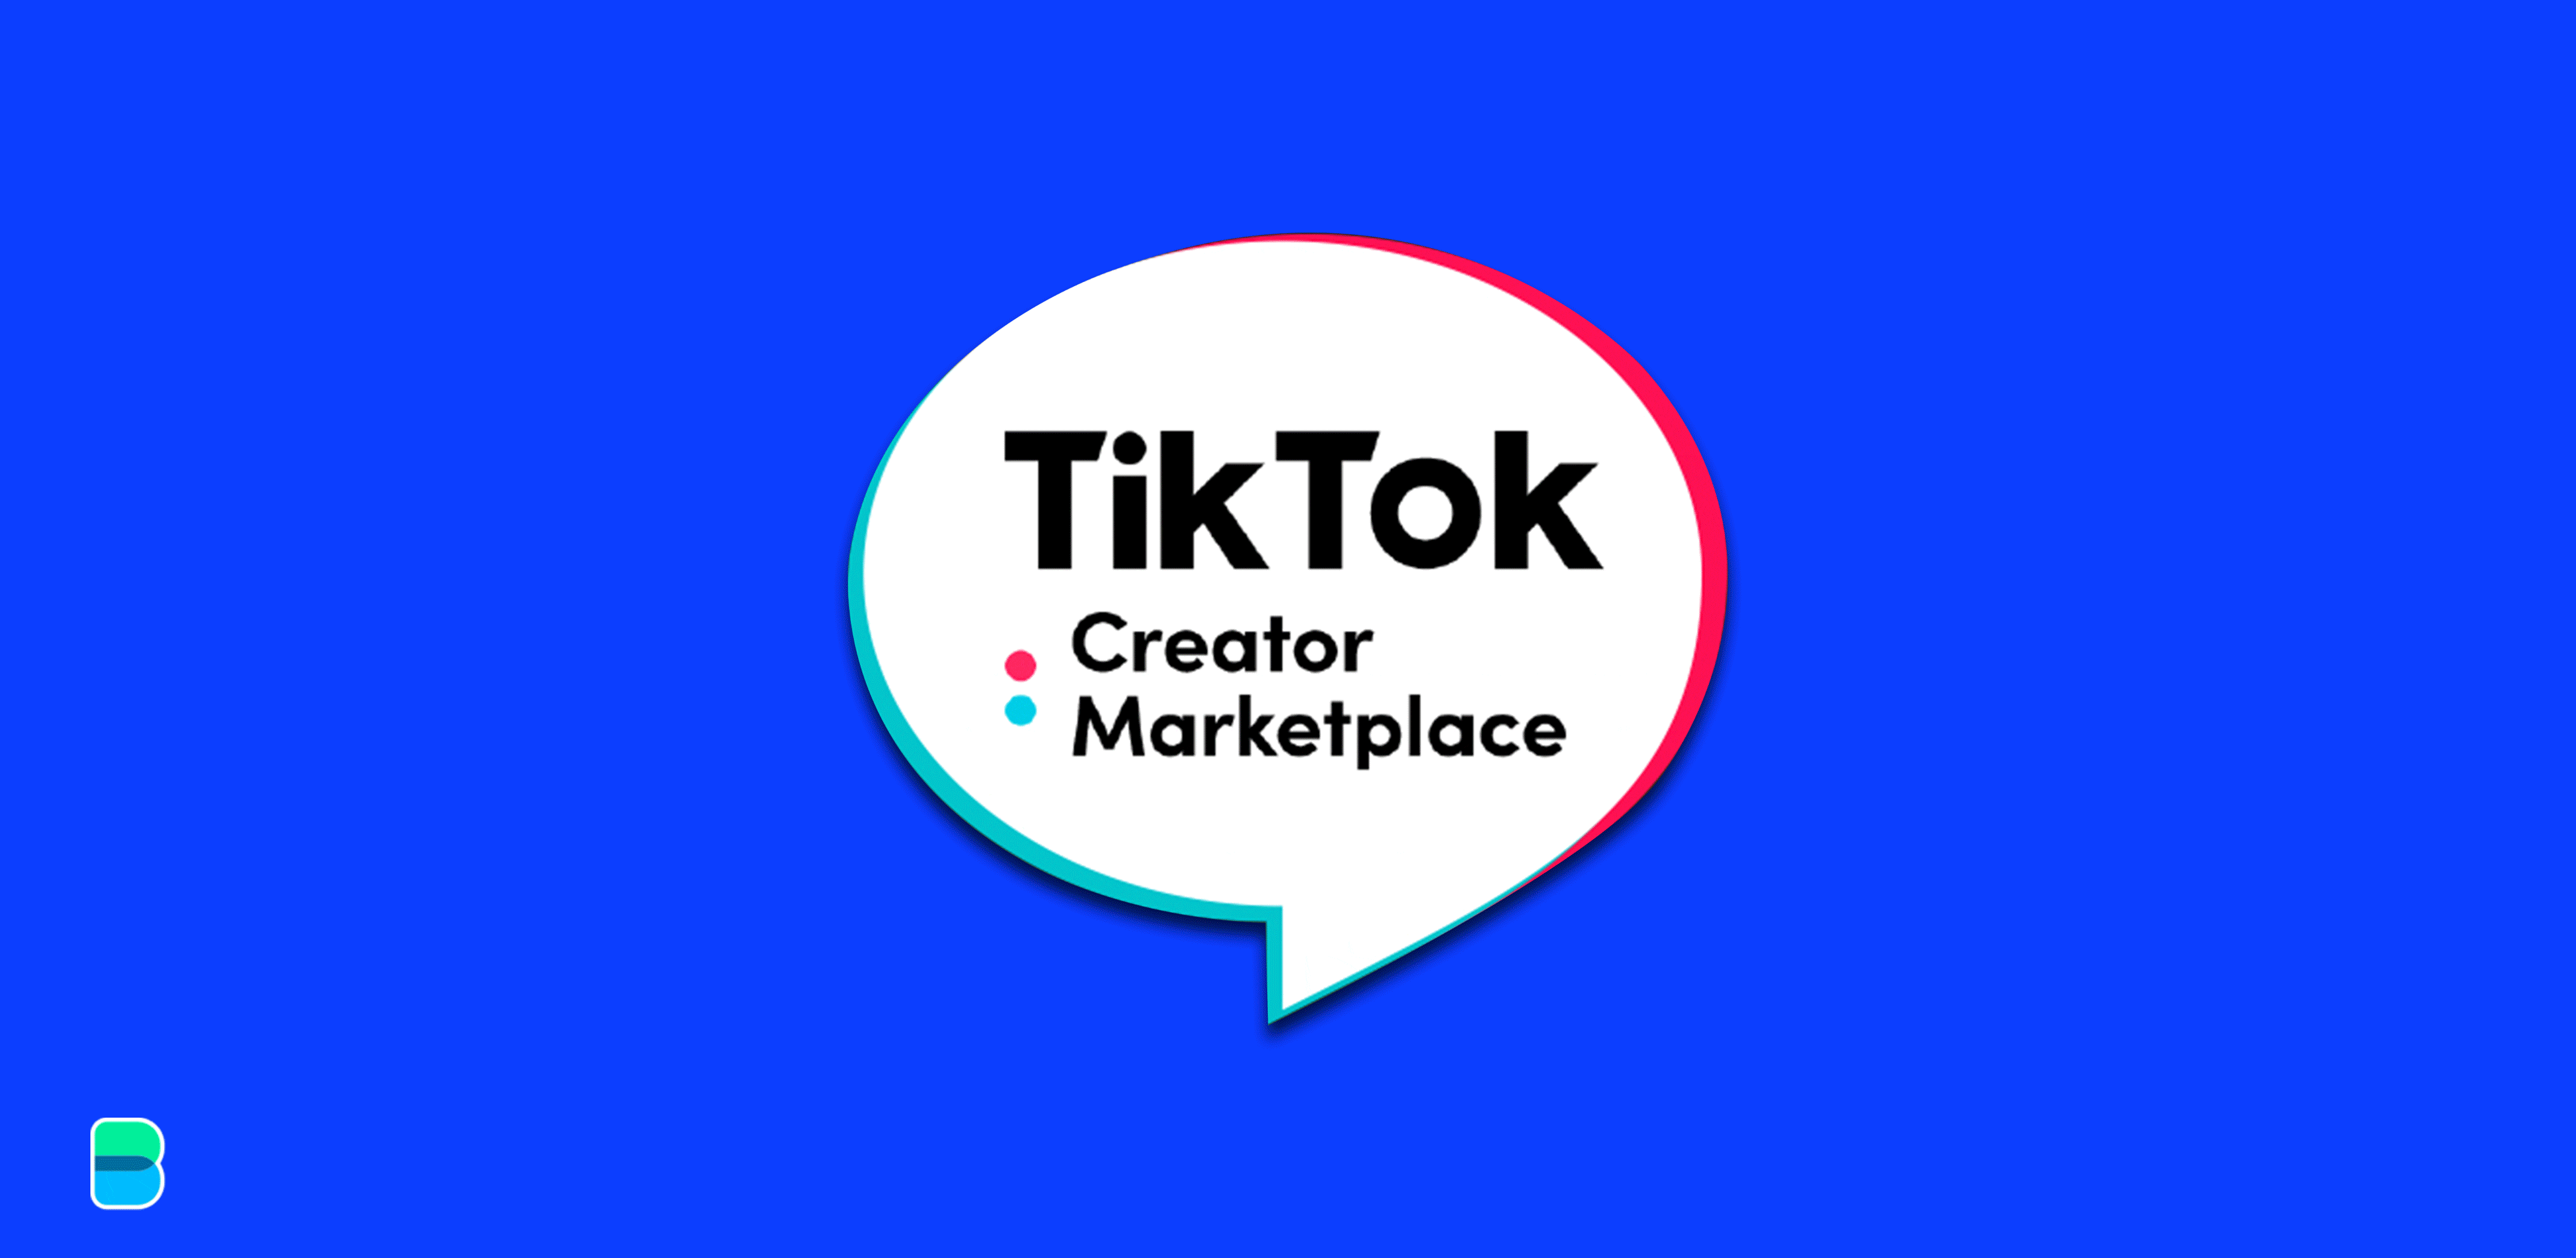 TikTok to play influencer/brand matchmaker